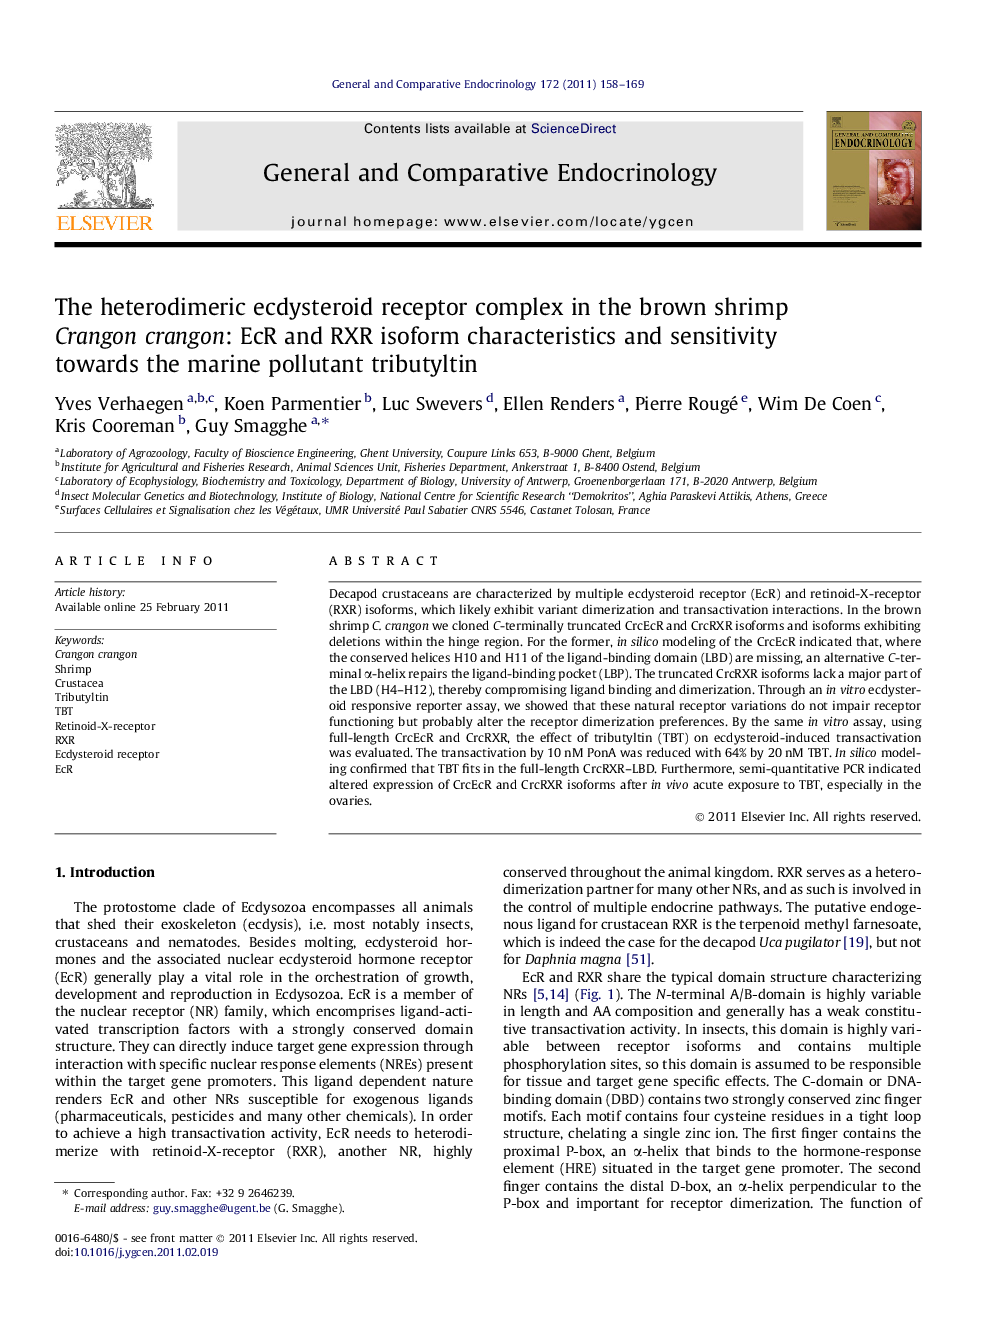 The heterodimeric ecdysteroid receptor complex in the brown shrimp Crangon crangon: EcR and RXR isoform characteristics and sensitivity towards the marine pollutant tributyltin